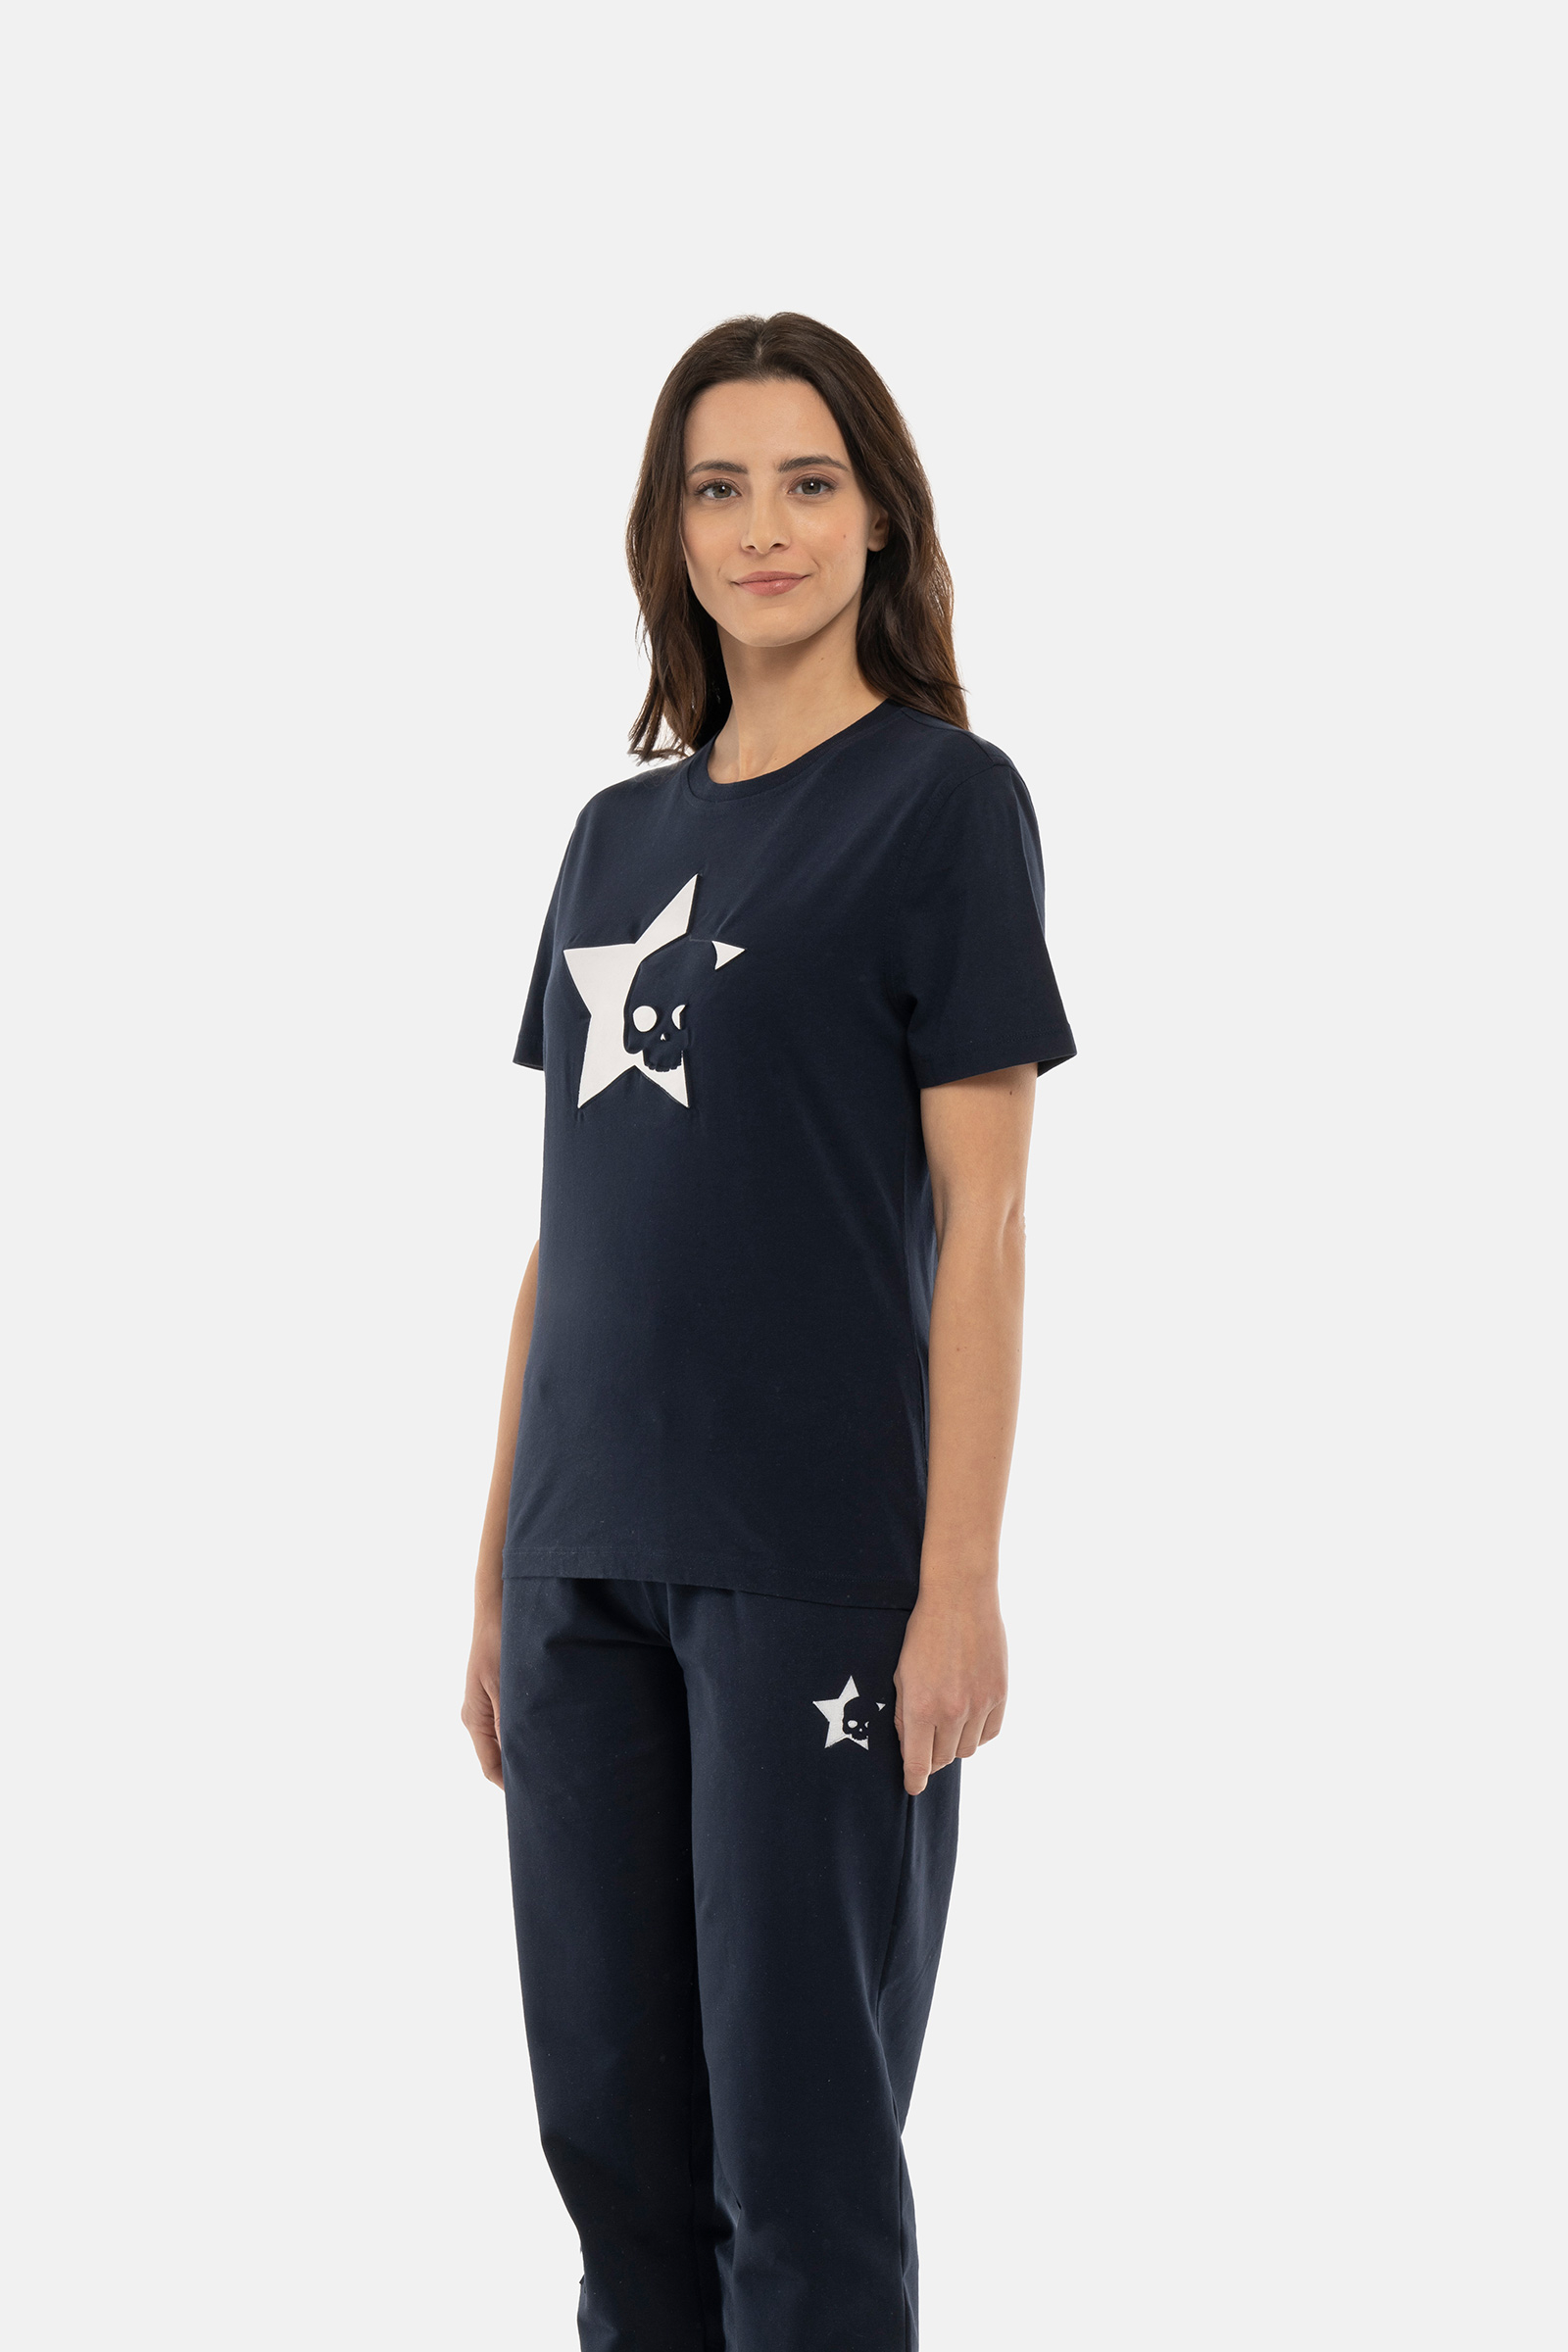 T-SHIRT STARS - BLUE - Abbigliamento sportivo | Hydrogen